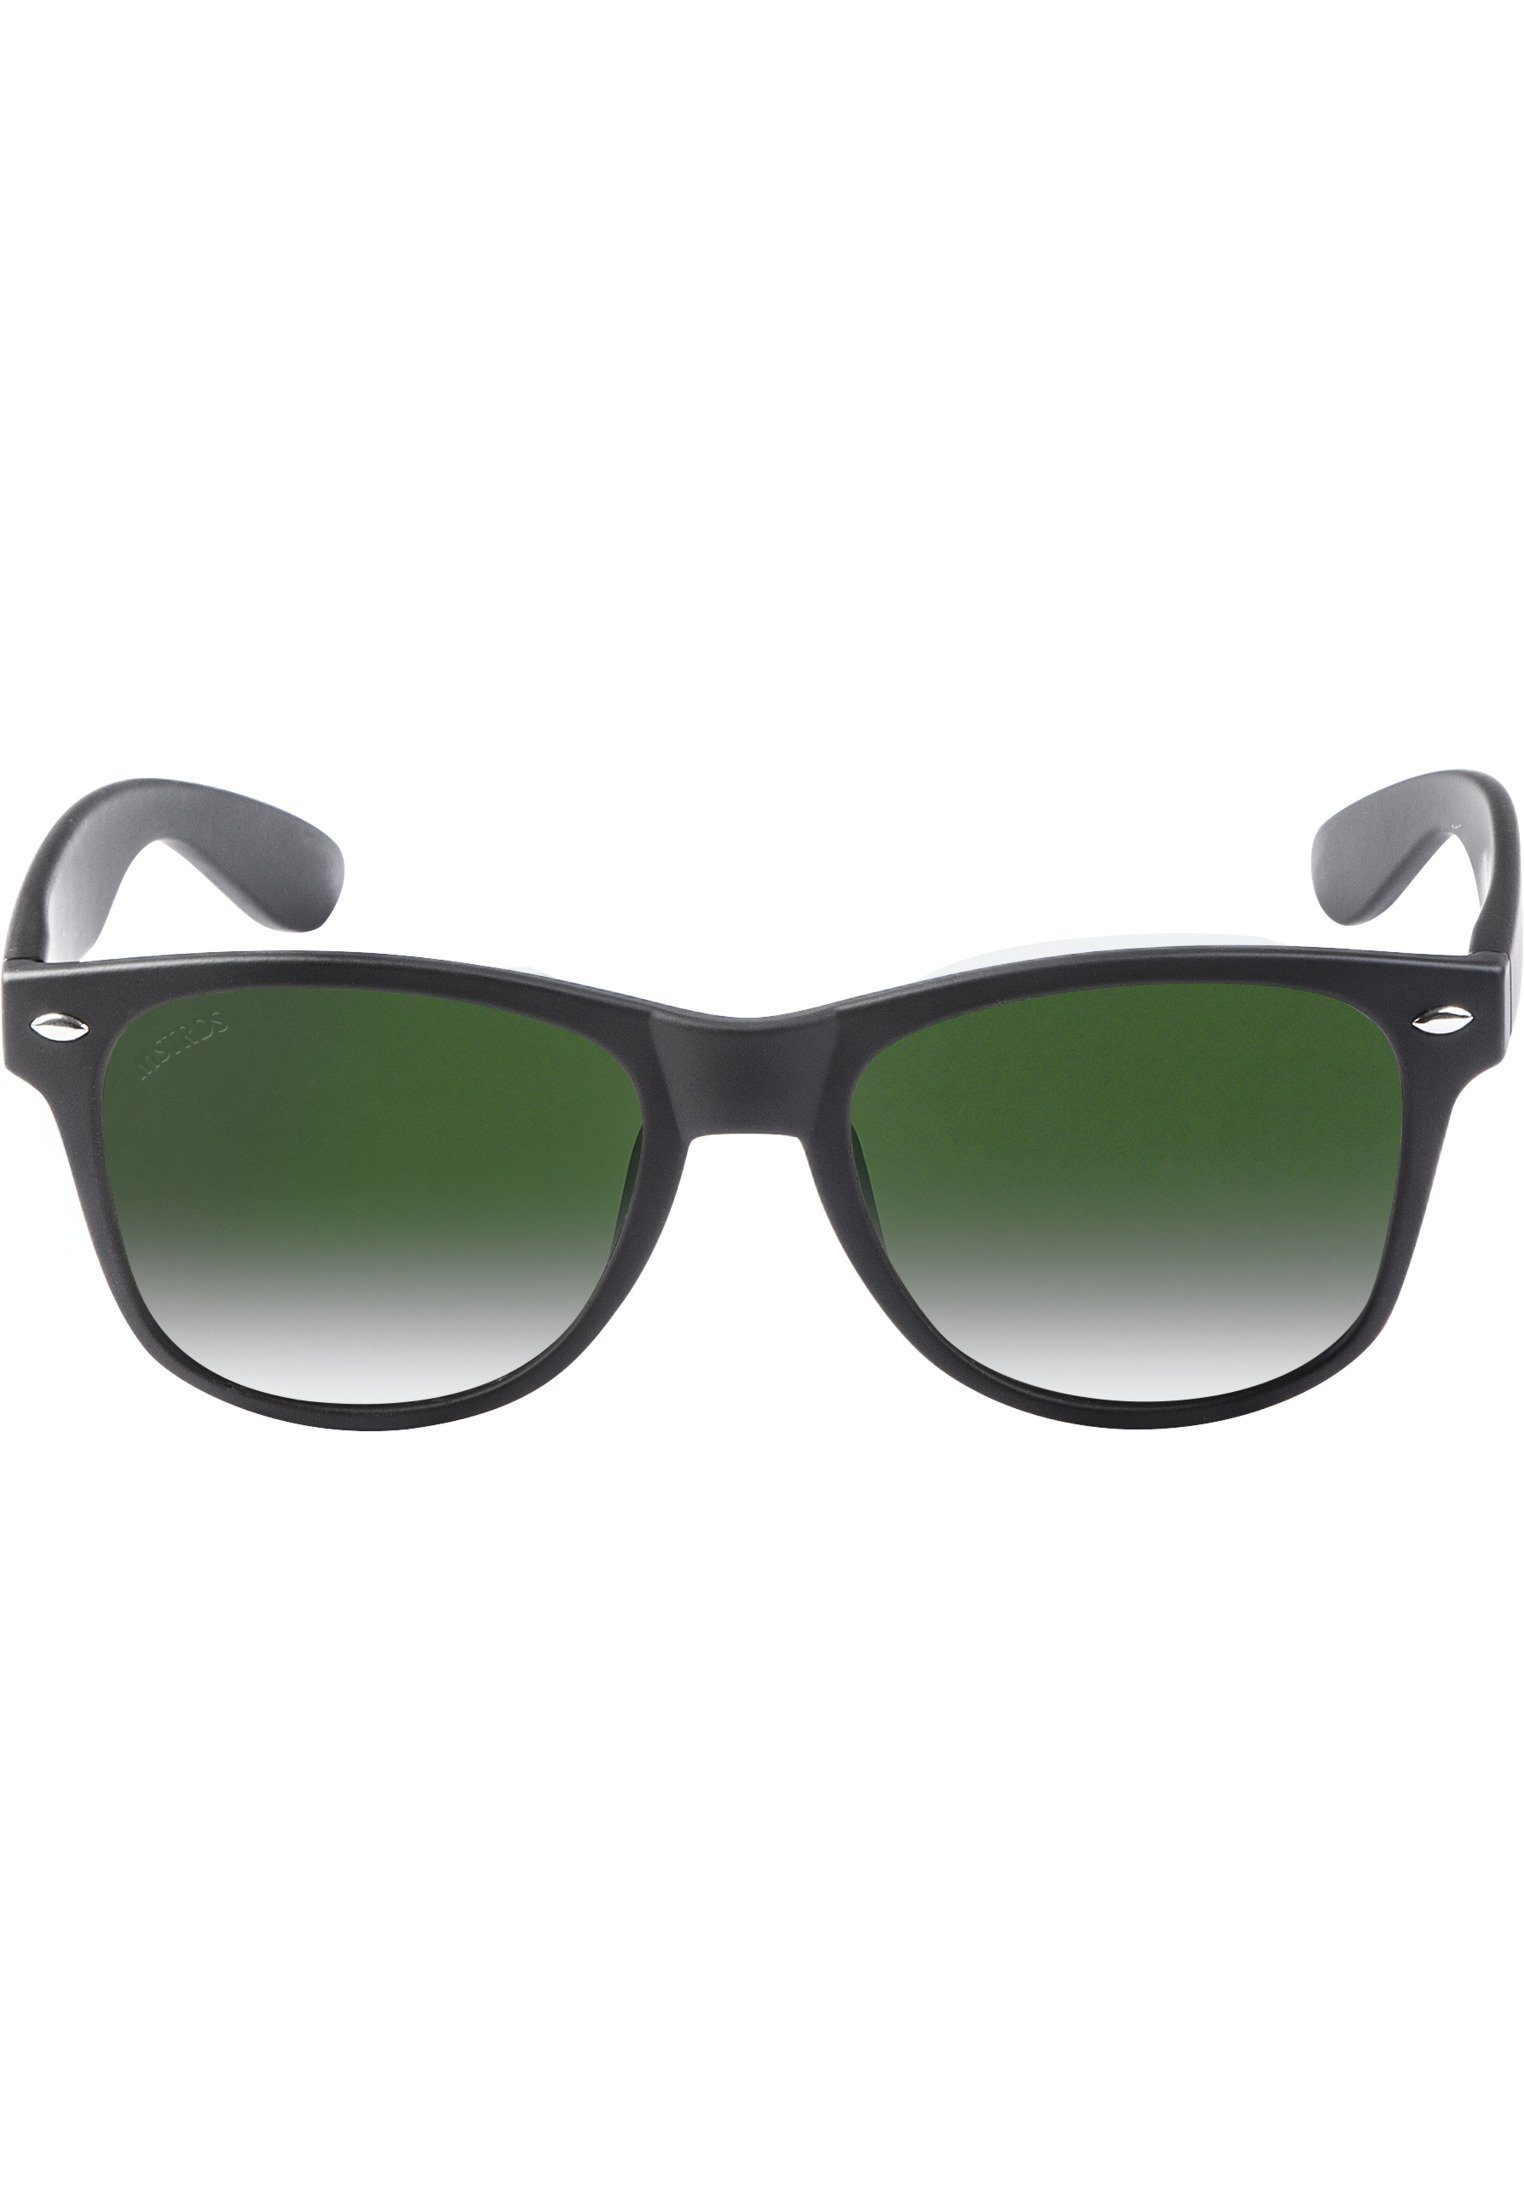 Accessoires für auch Ideal im Sport Sunglasses MSTRDS Freien Youth, Likoma Sonnenbrille geeignet